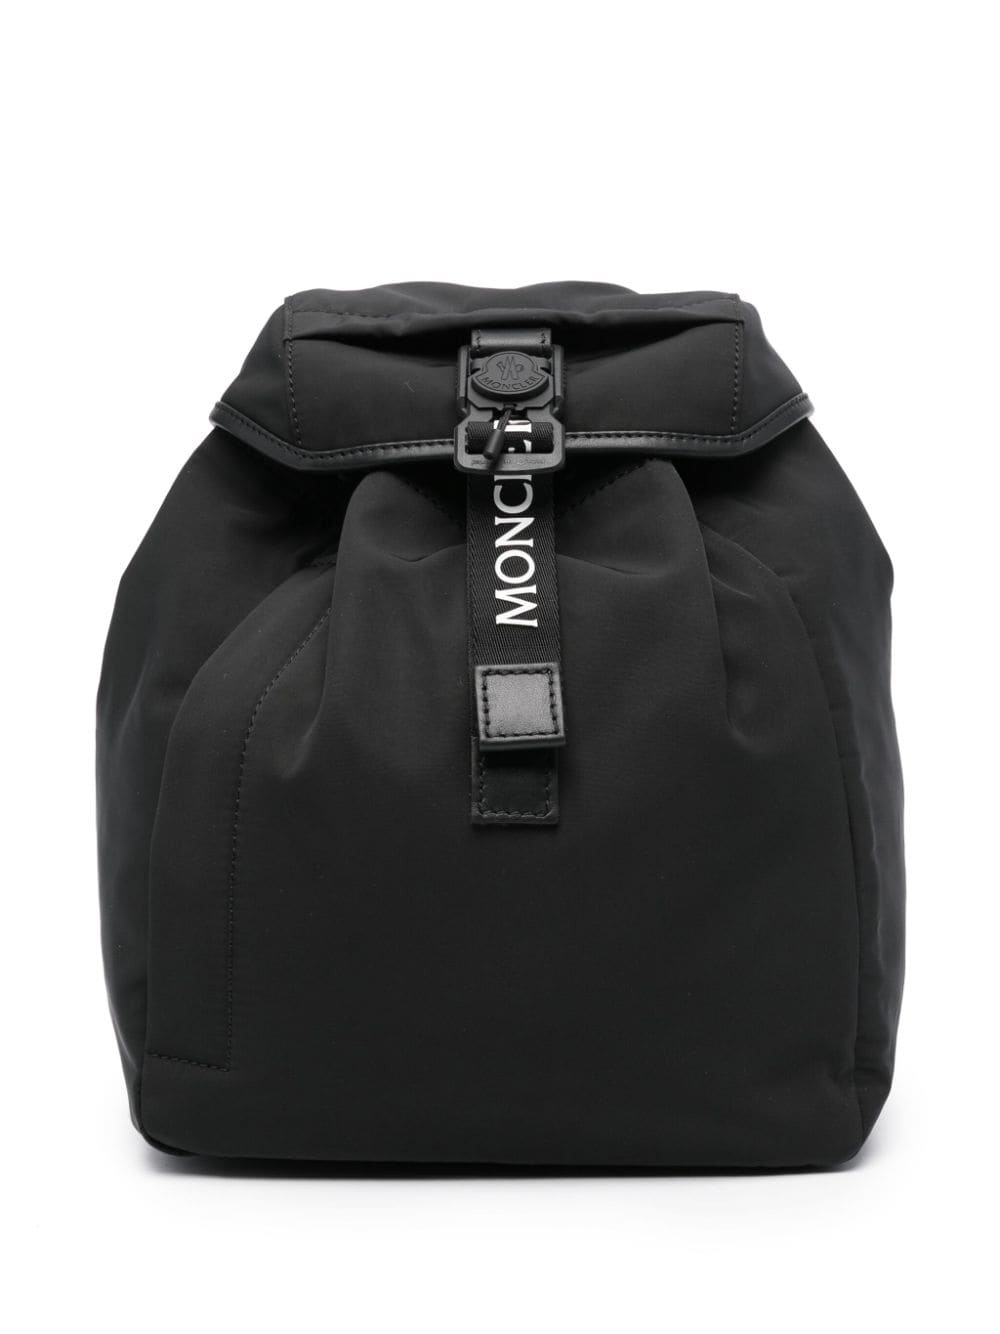 'Trick' backpack